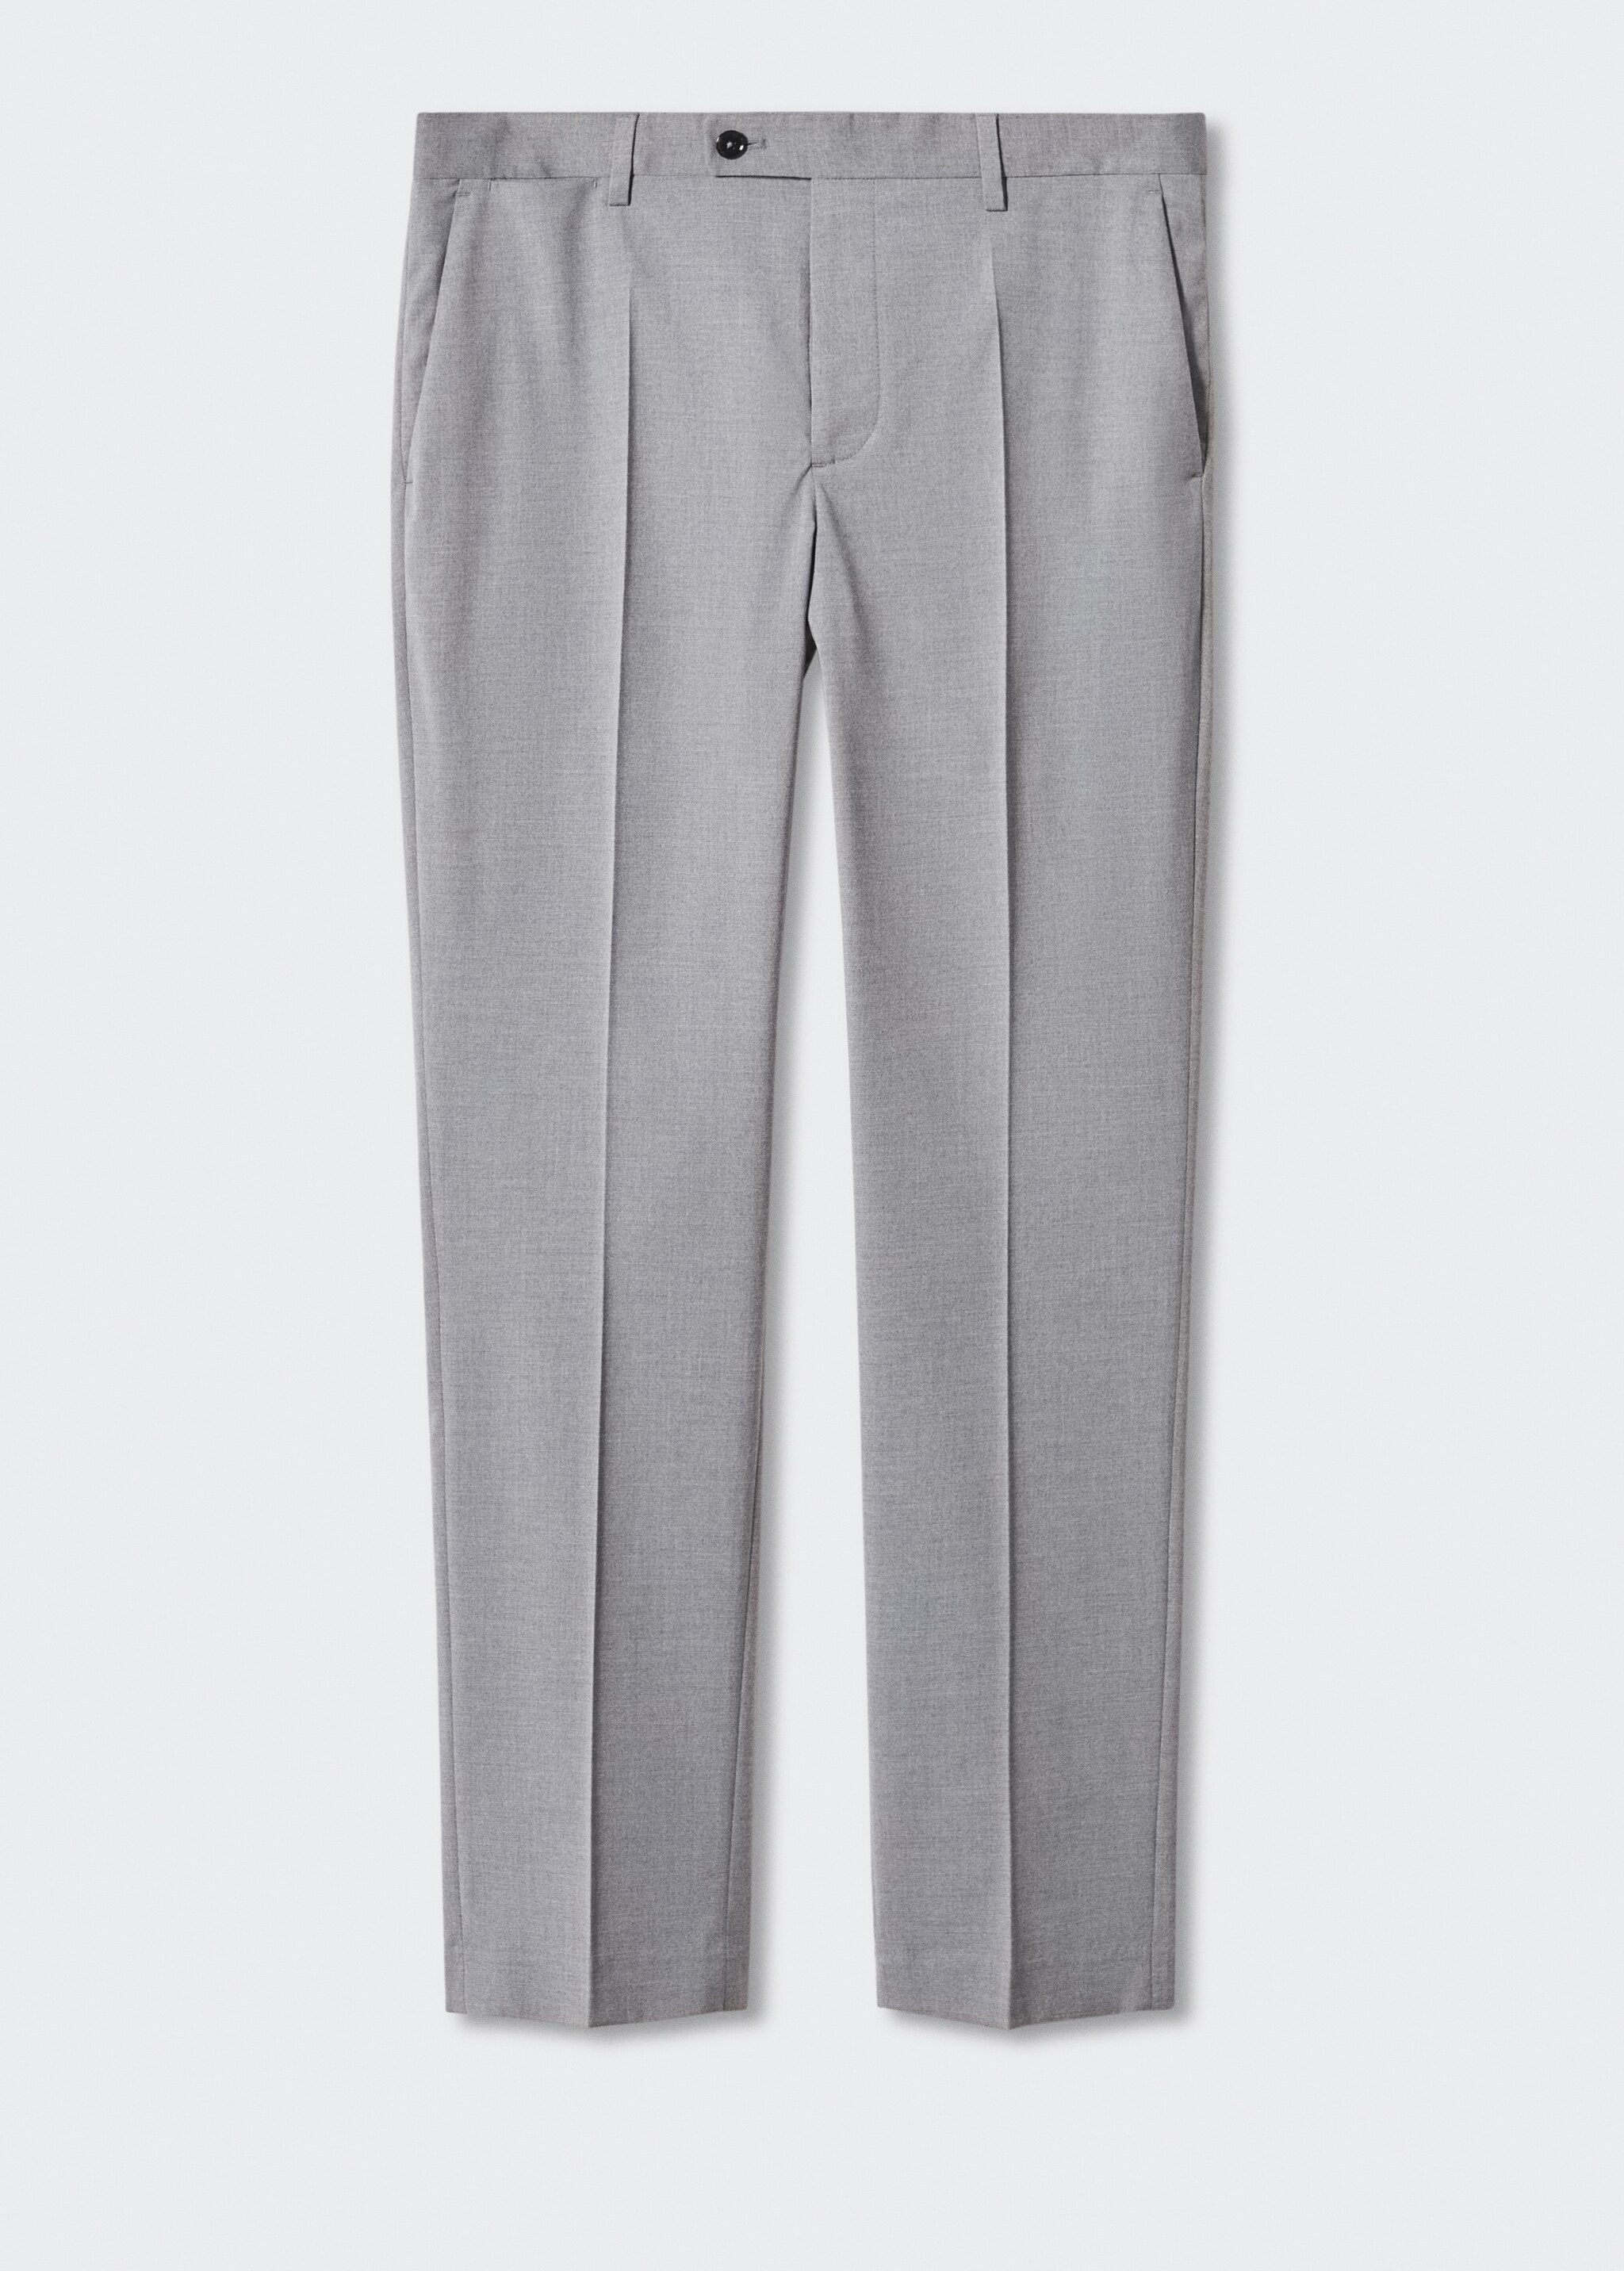 Pantalons vestir slim fit quadres - Article sense model